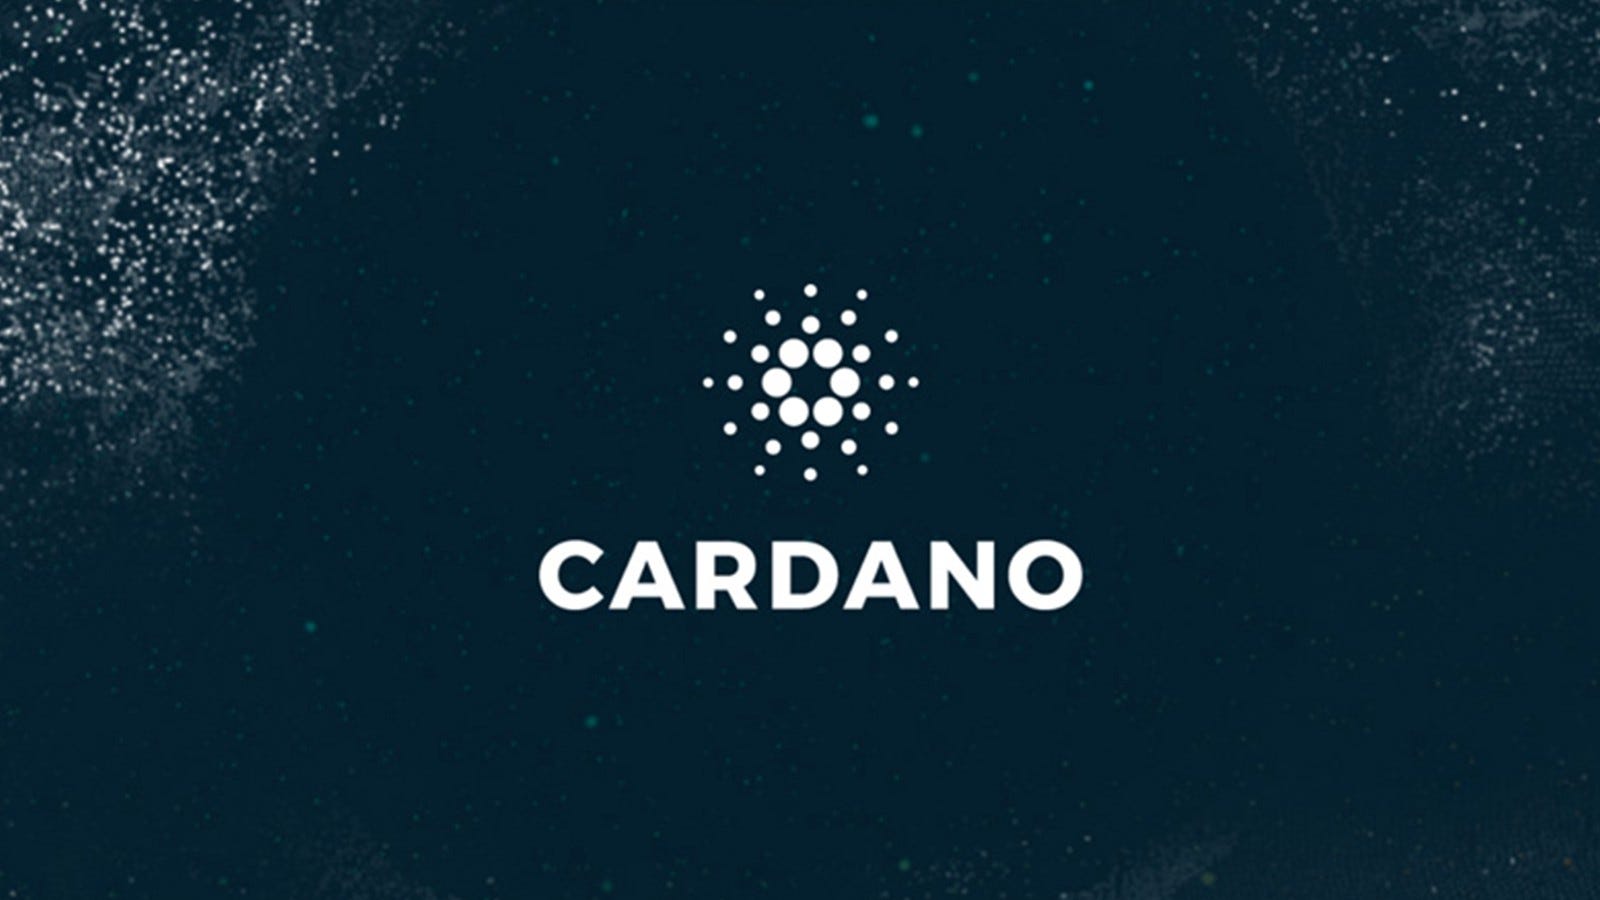 New Balance ใช้บล็อกเชน Cardano Blockchain ให้ลูกค้าเช็ครองเท้าของแท้